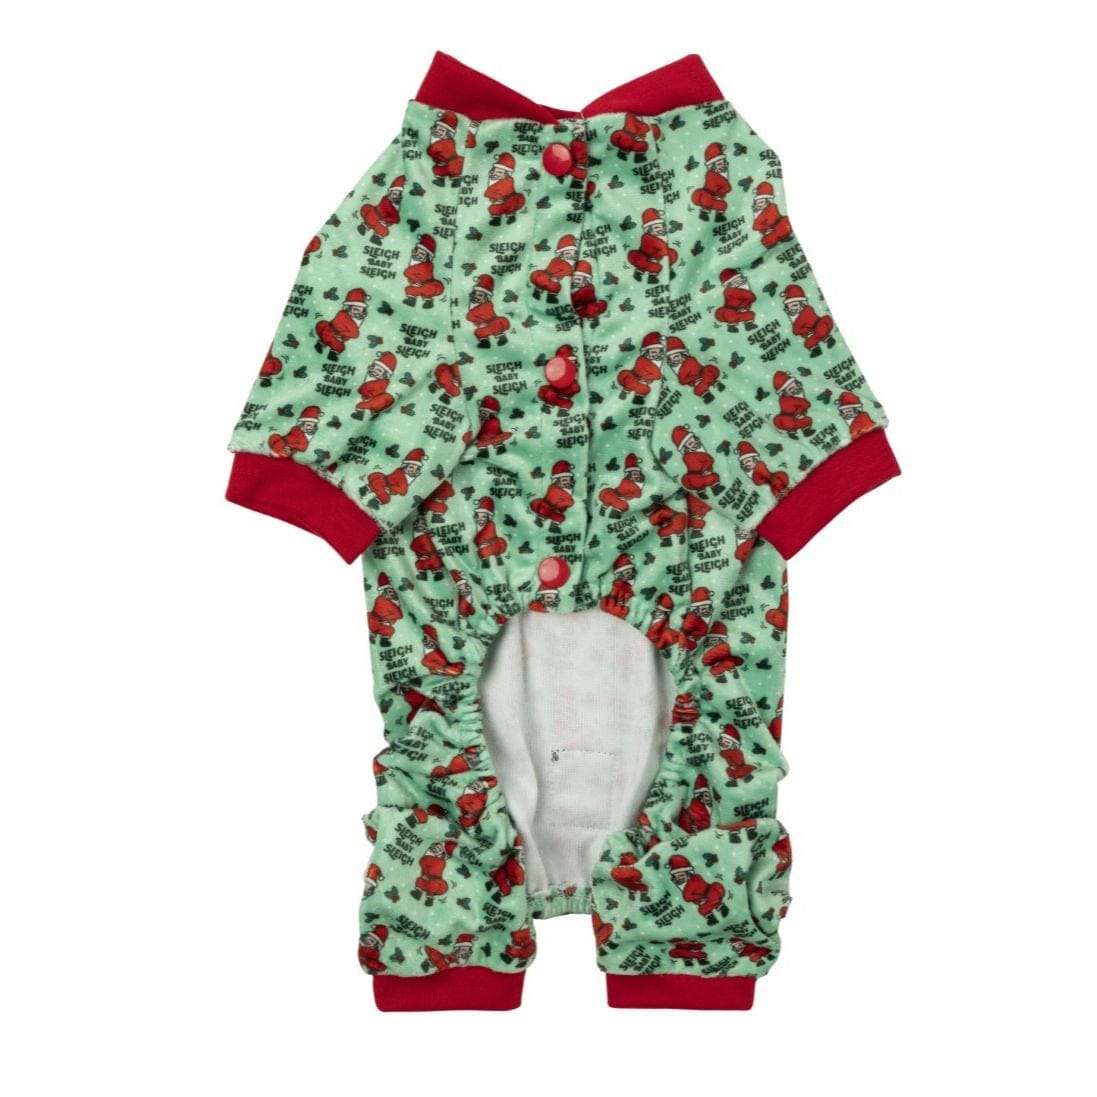 Fuzzyard Xmas Pyjama – Sleigh Baby Sleigh